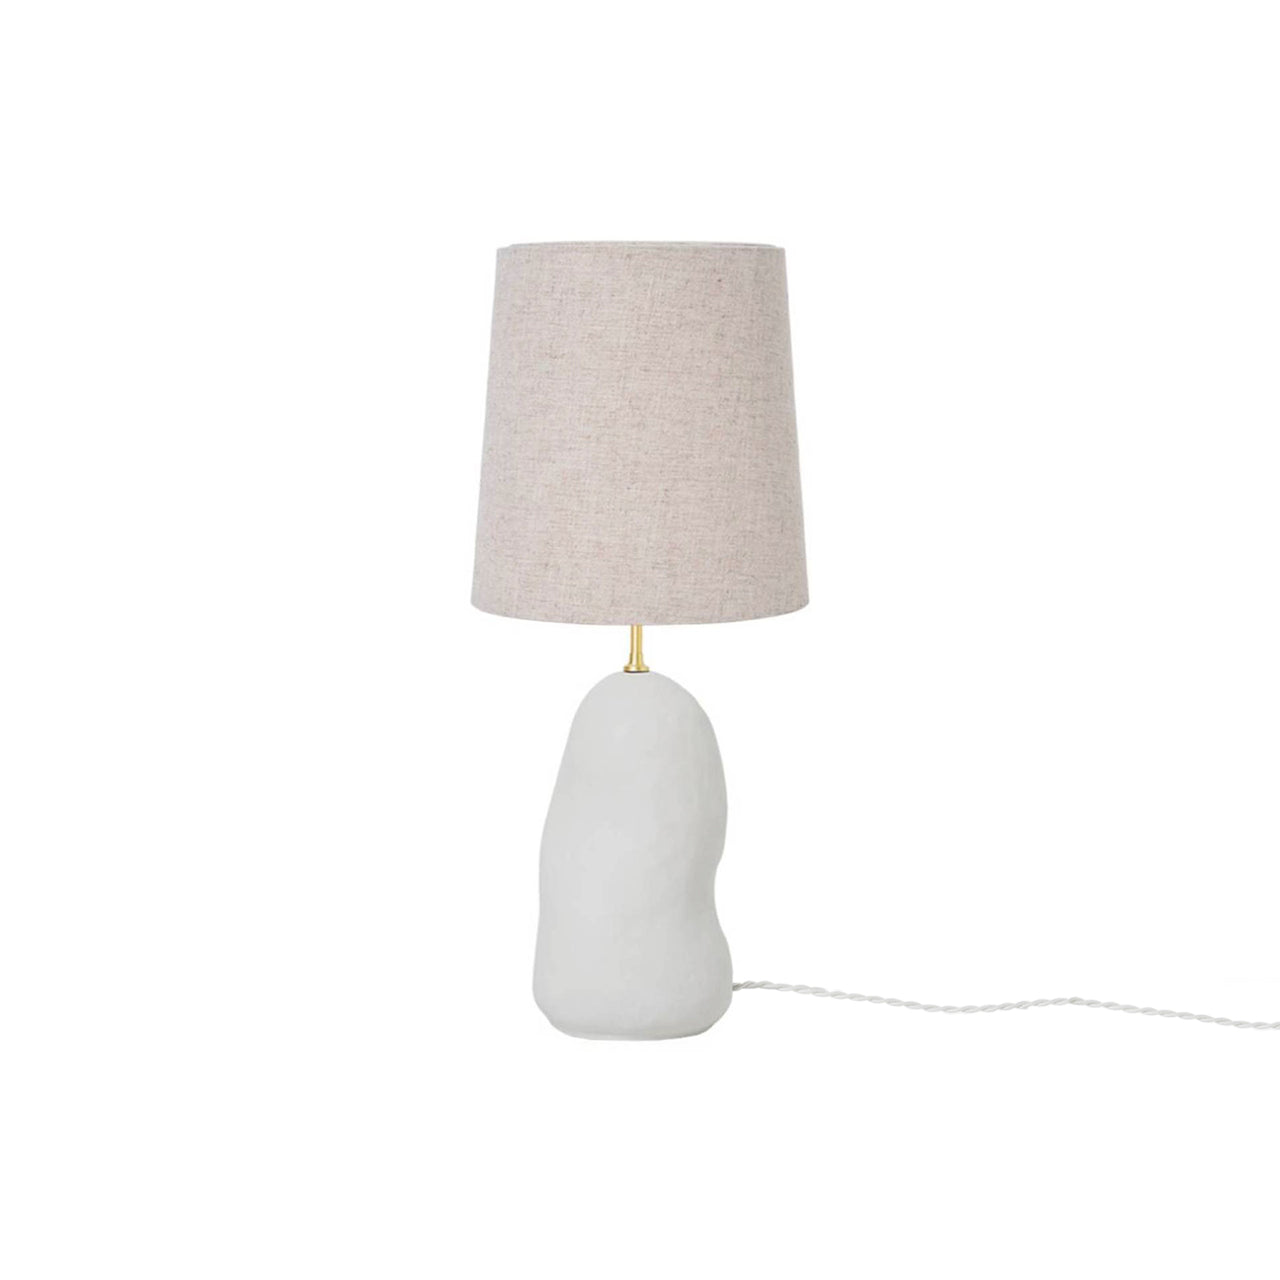 Hebe Lamp: Medium + Natural + Off-White